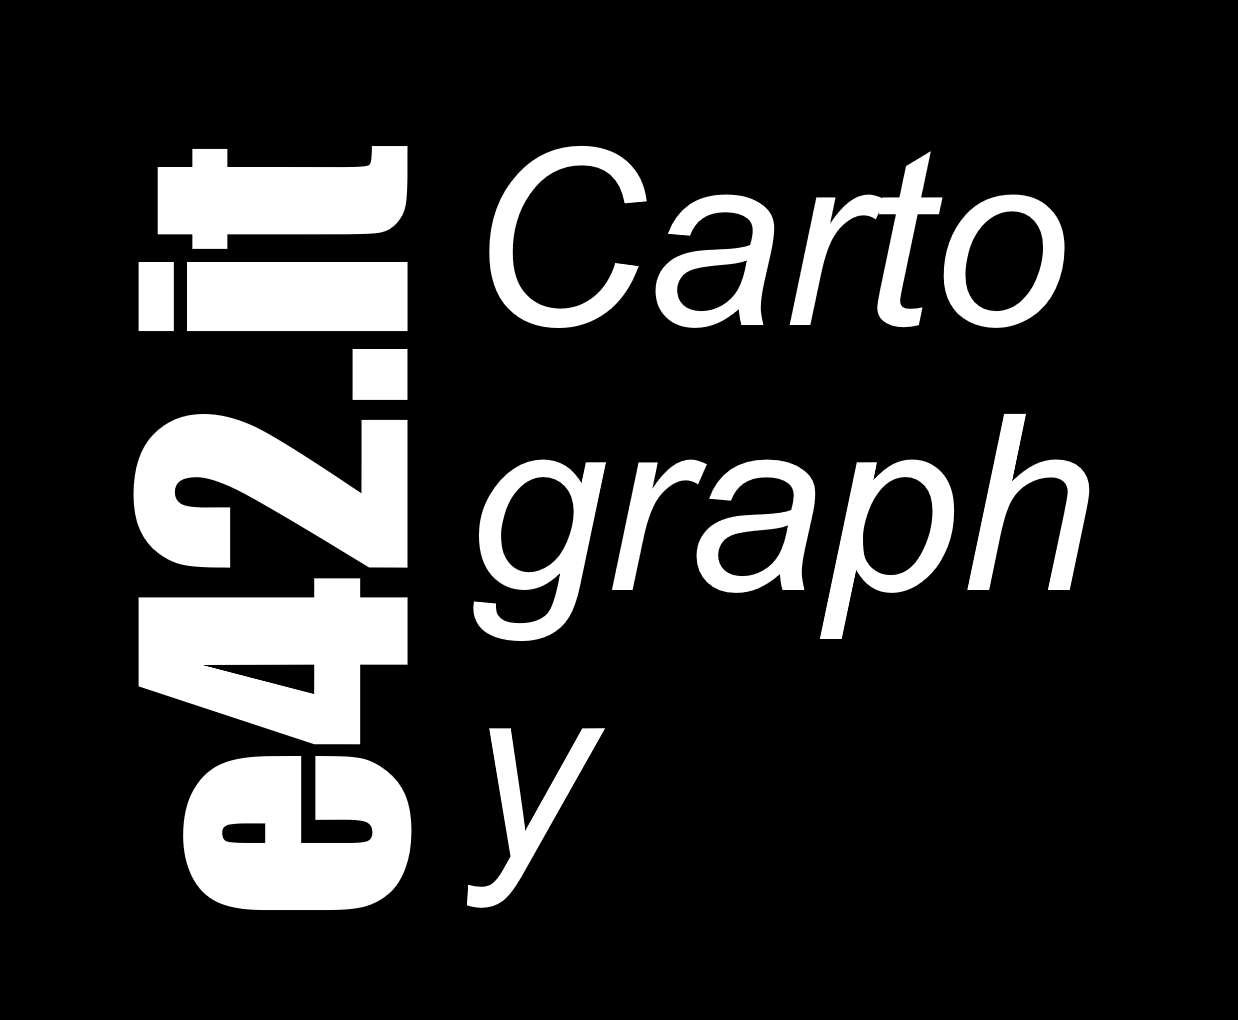 e42it logo cartography